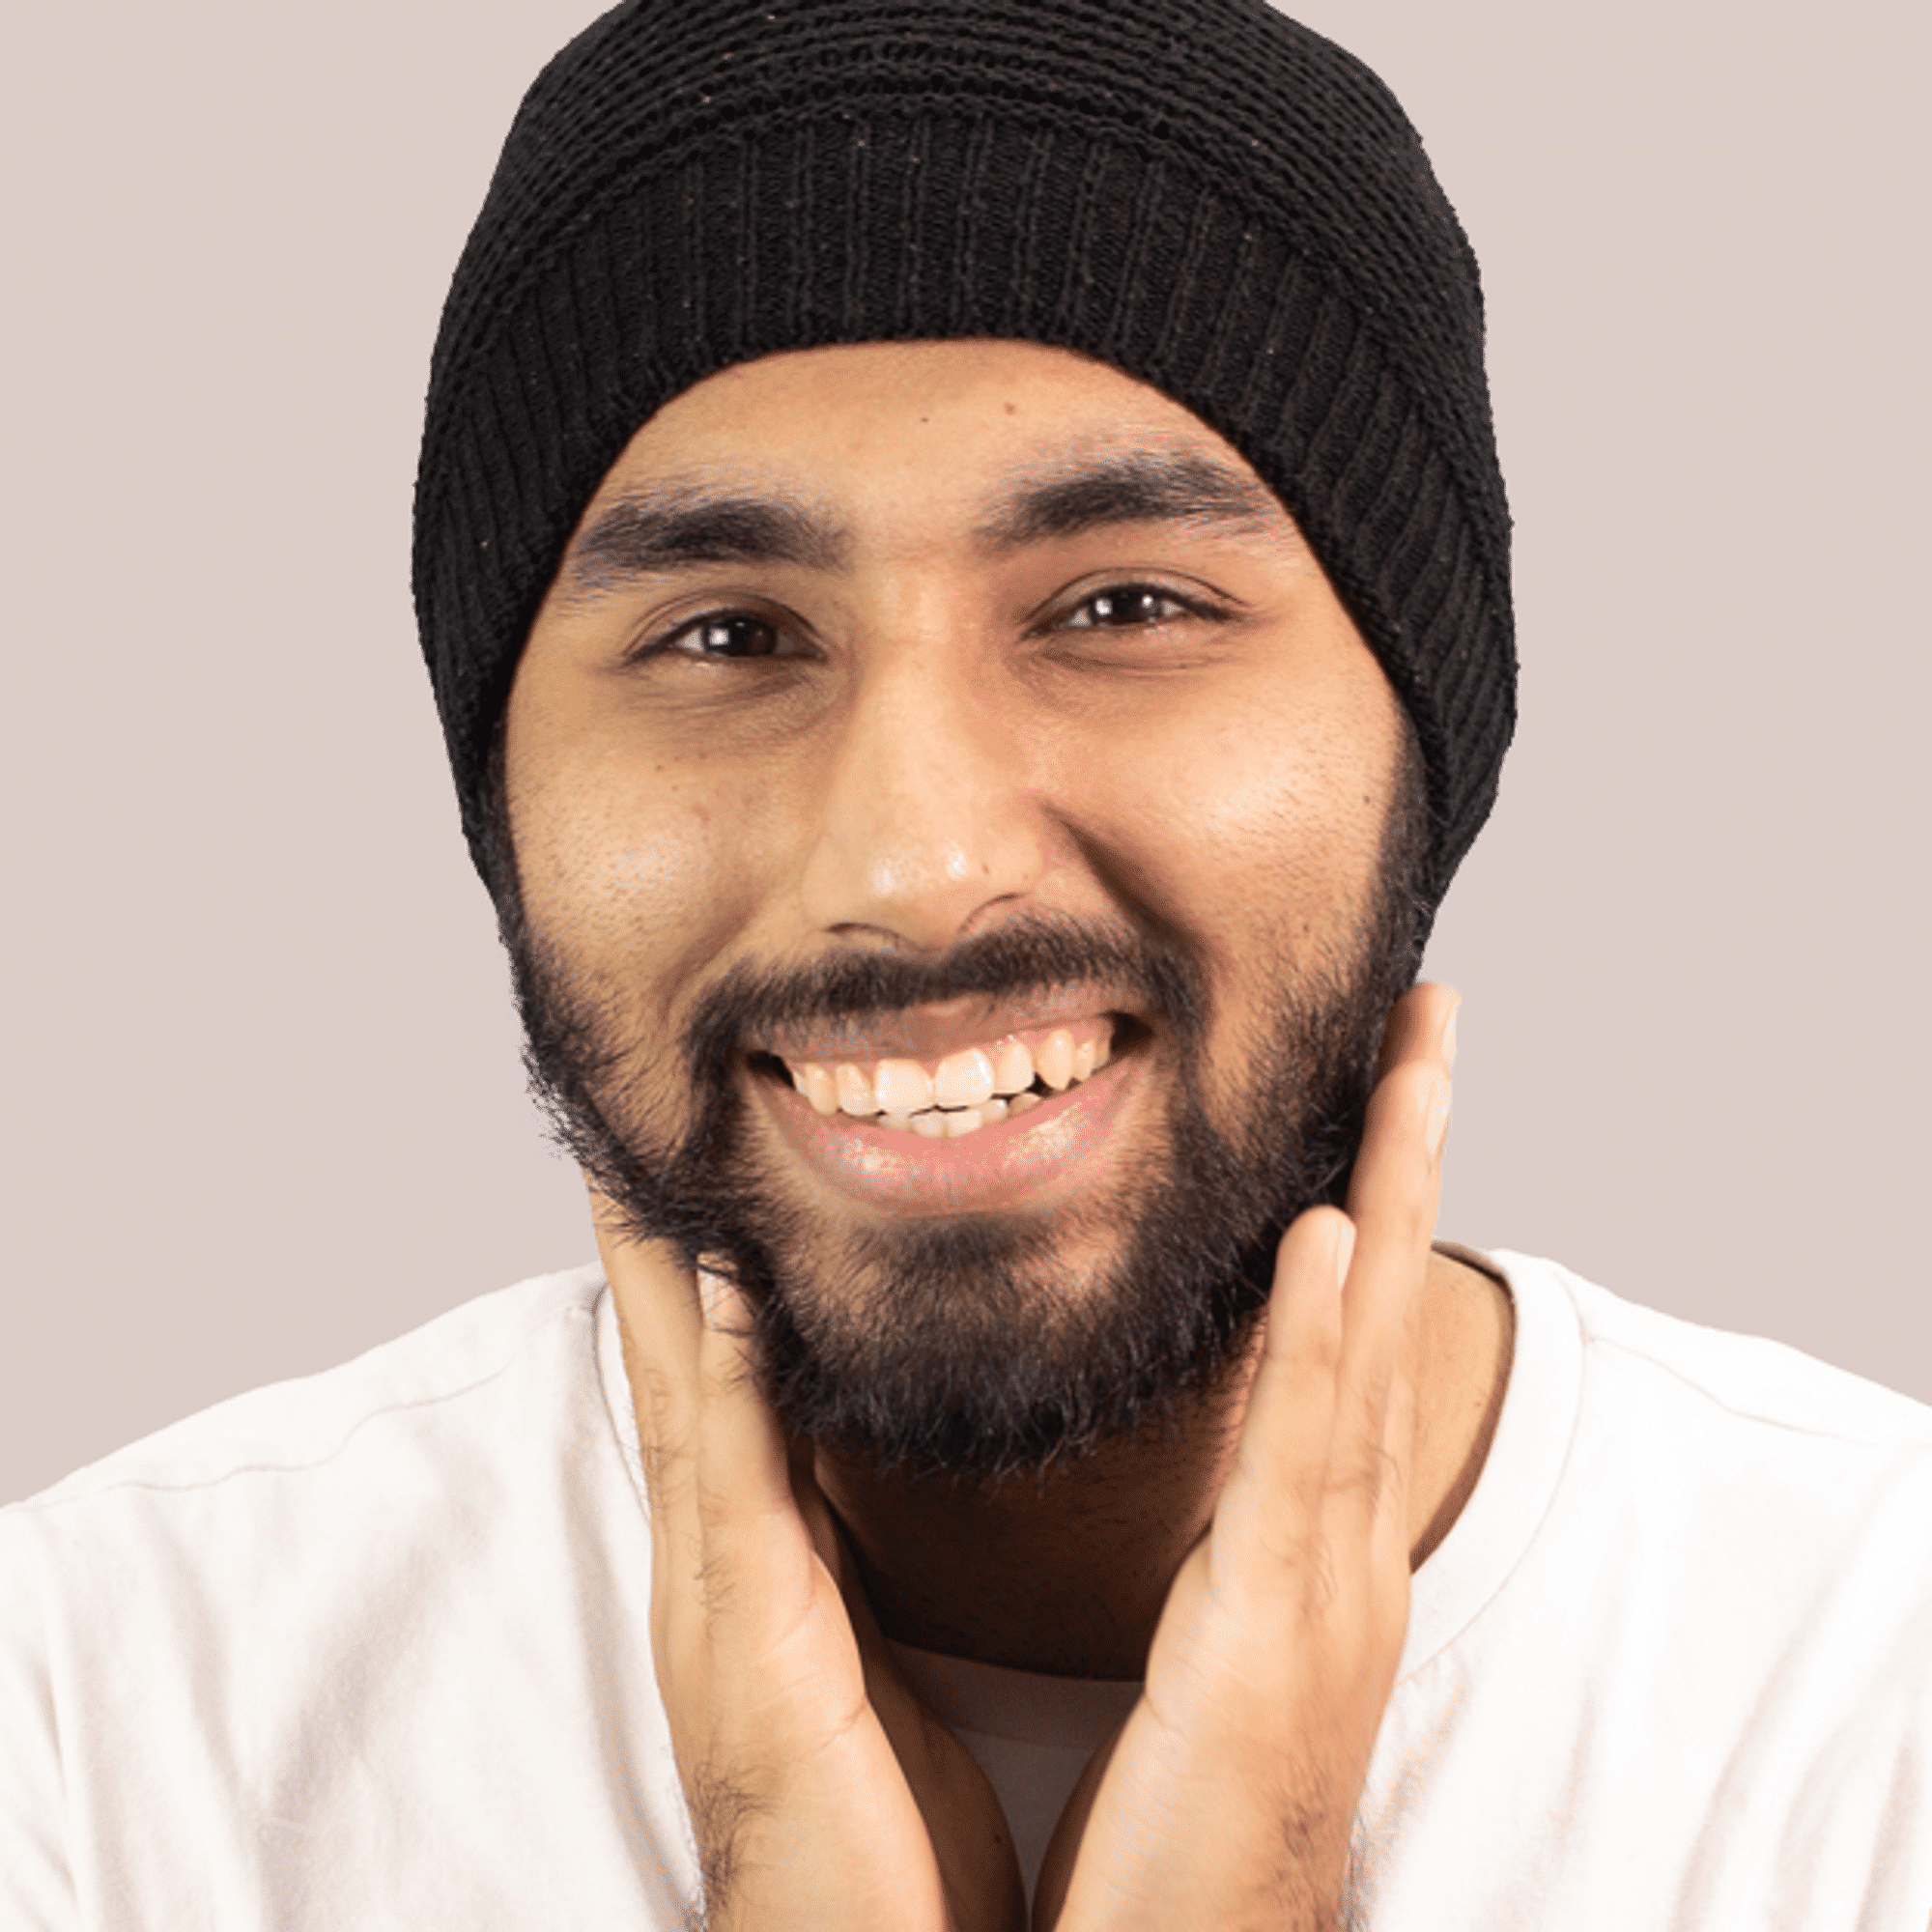 Healthy Beard Image